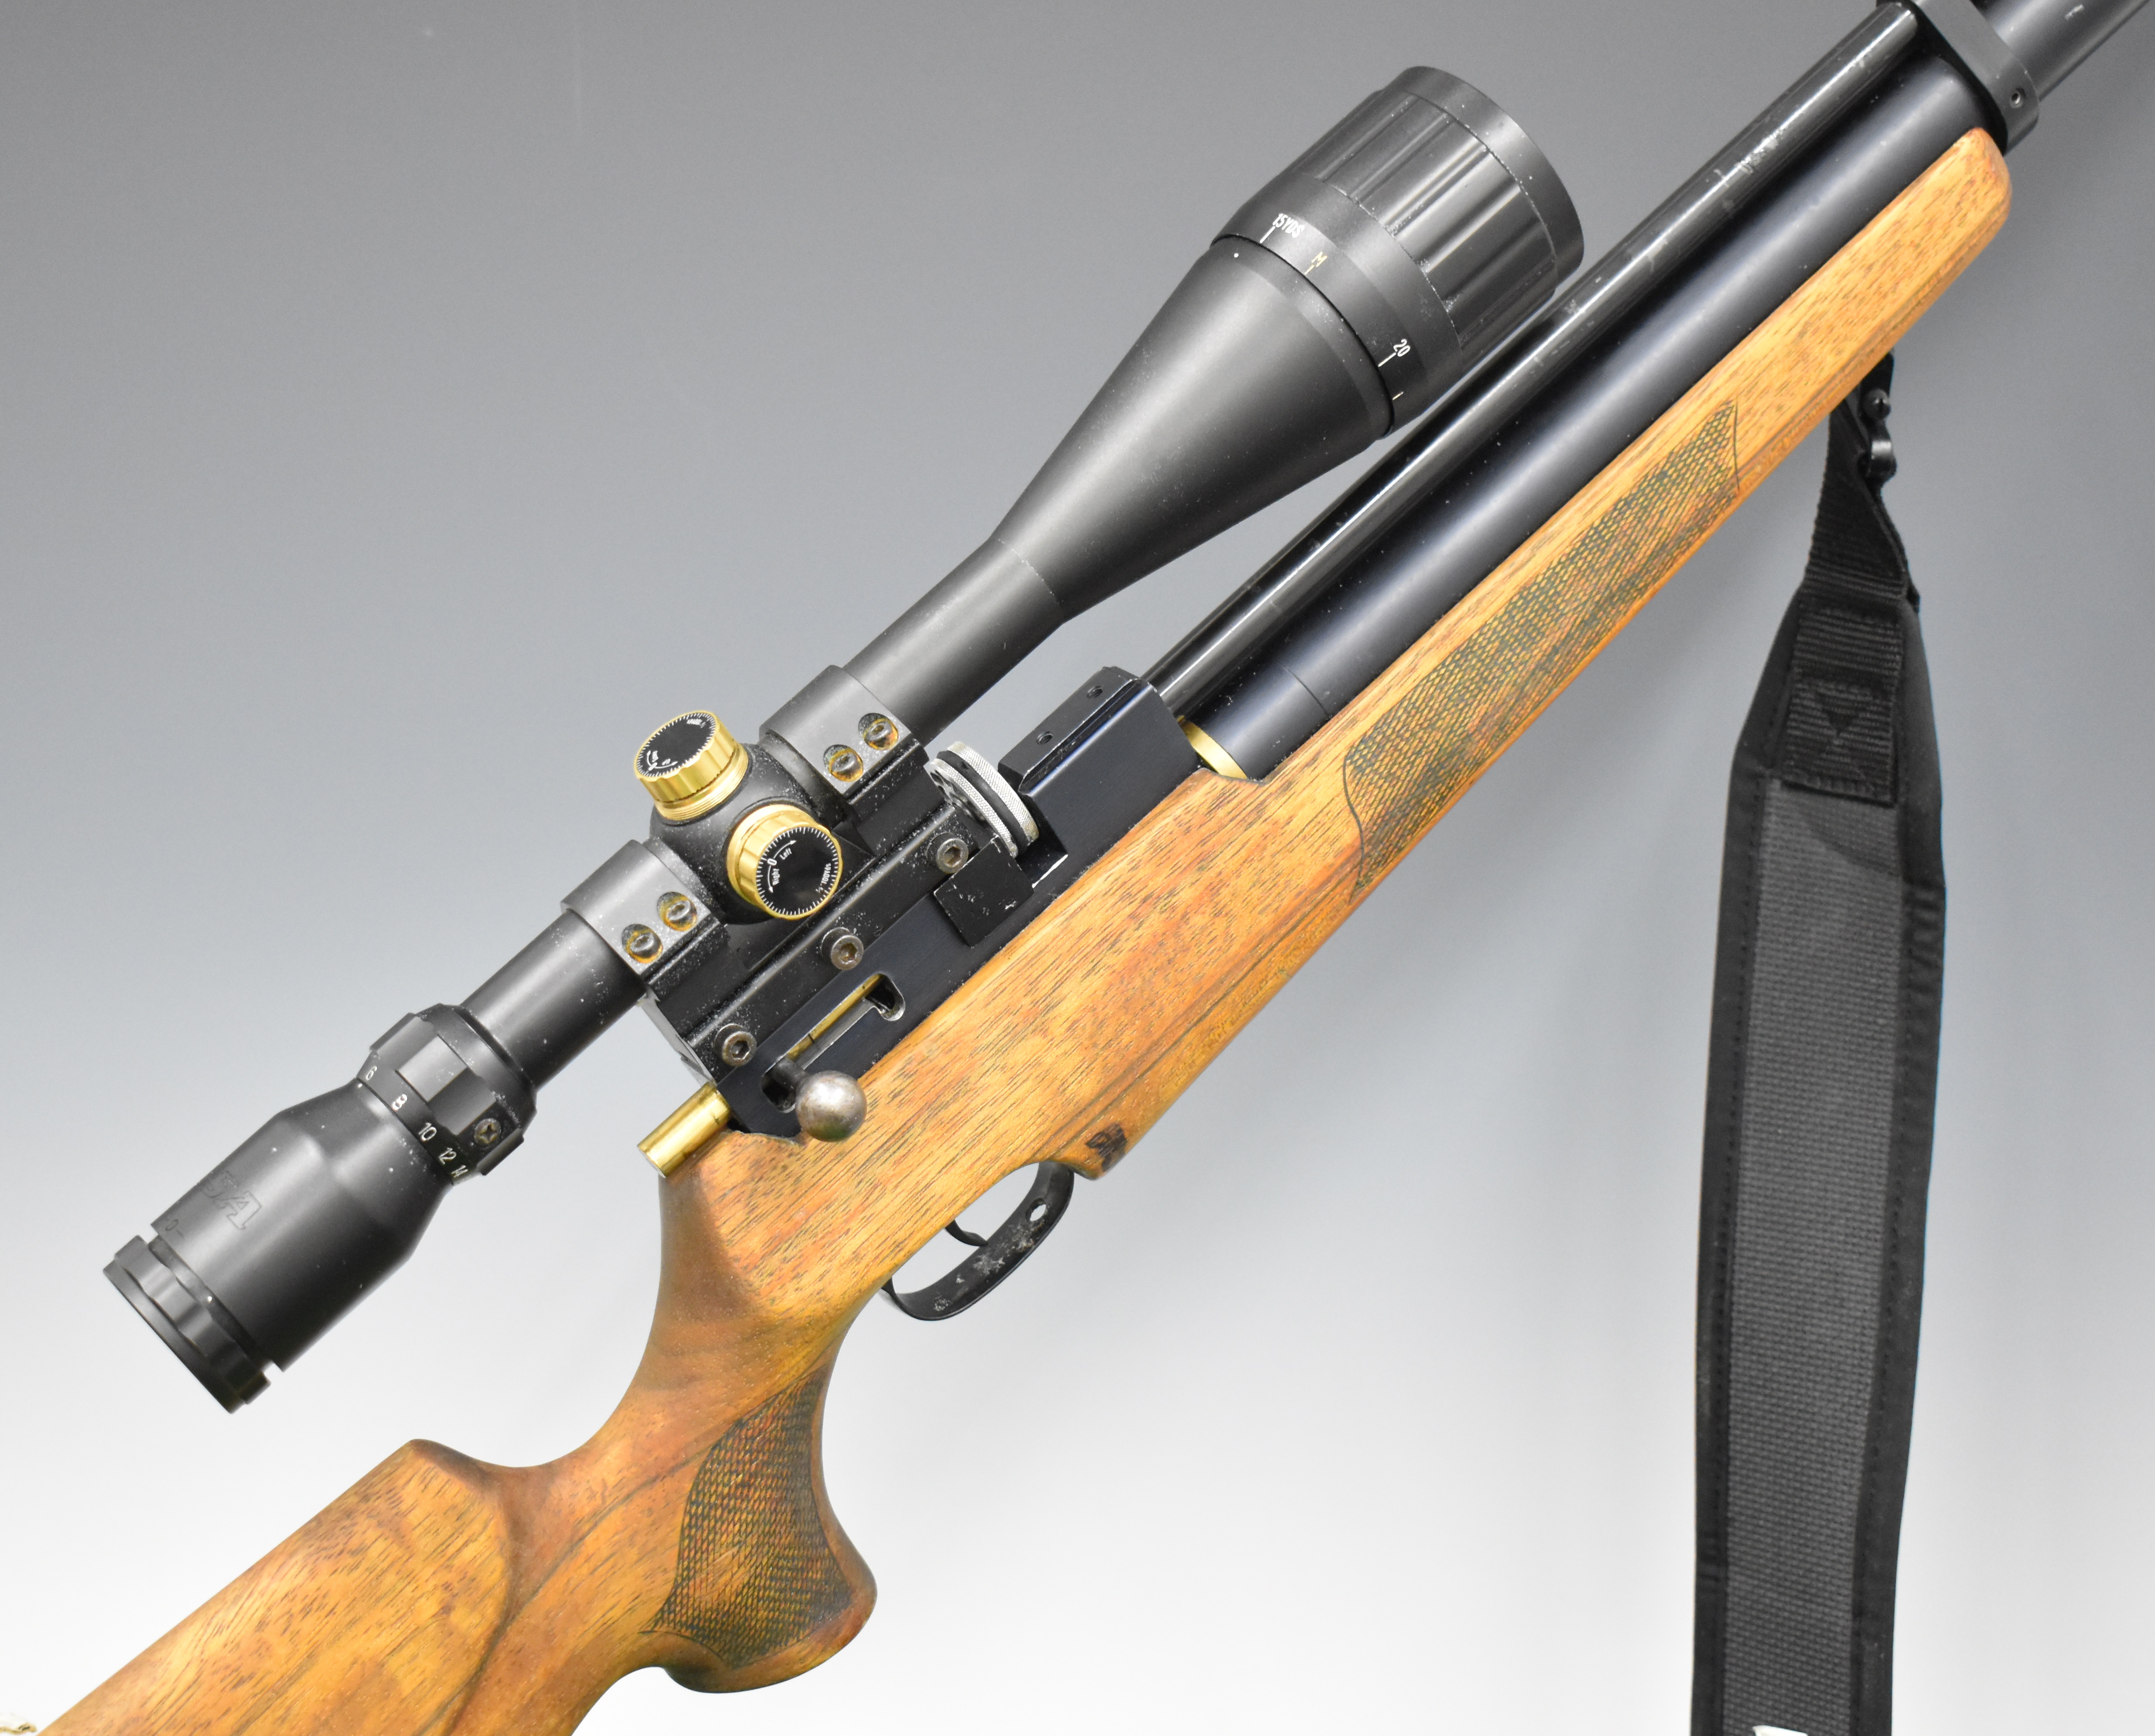 FX Logun Solo .22 PCP air rifle with chequered semi-pistol grip and forend, raised cheek piece,